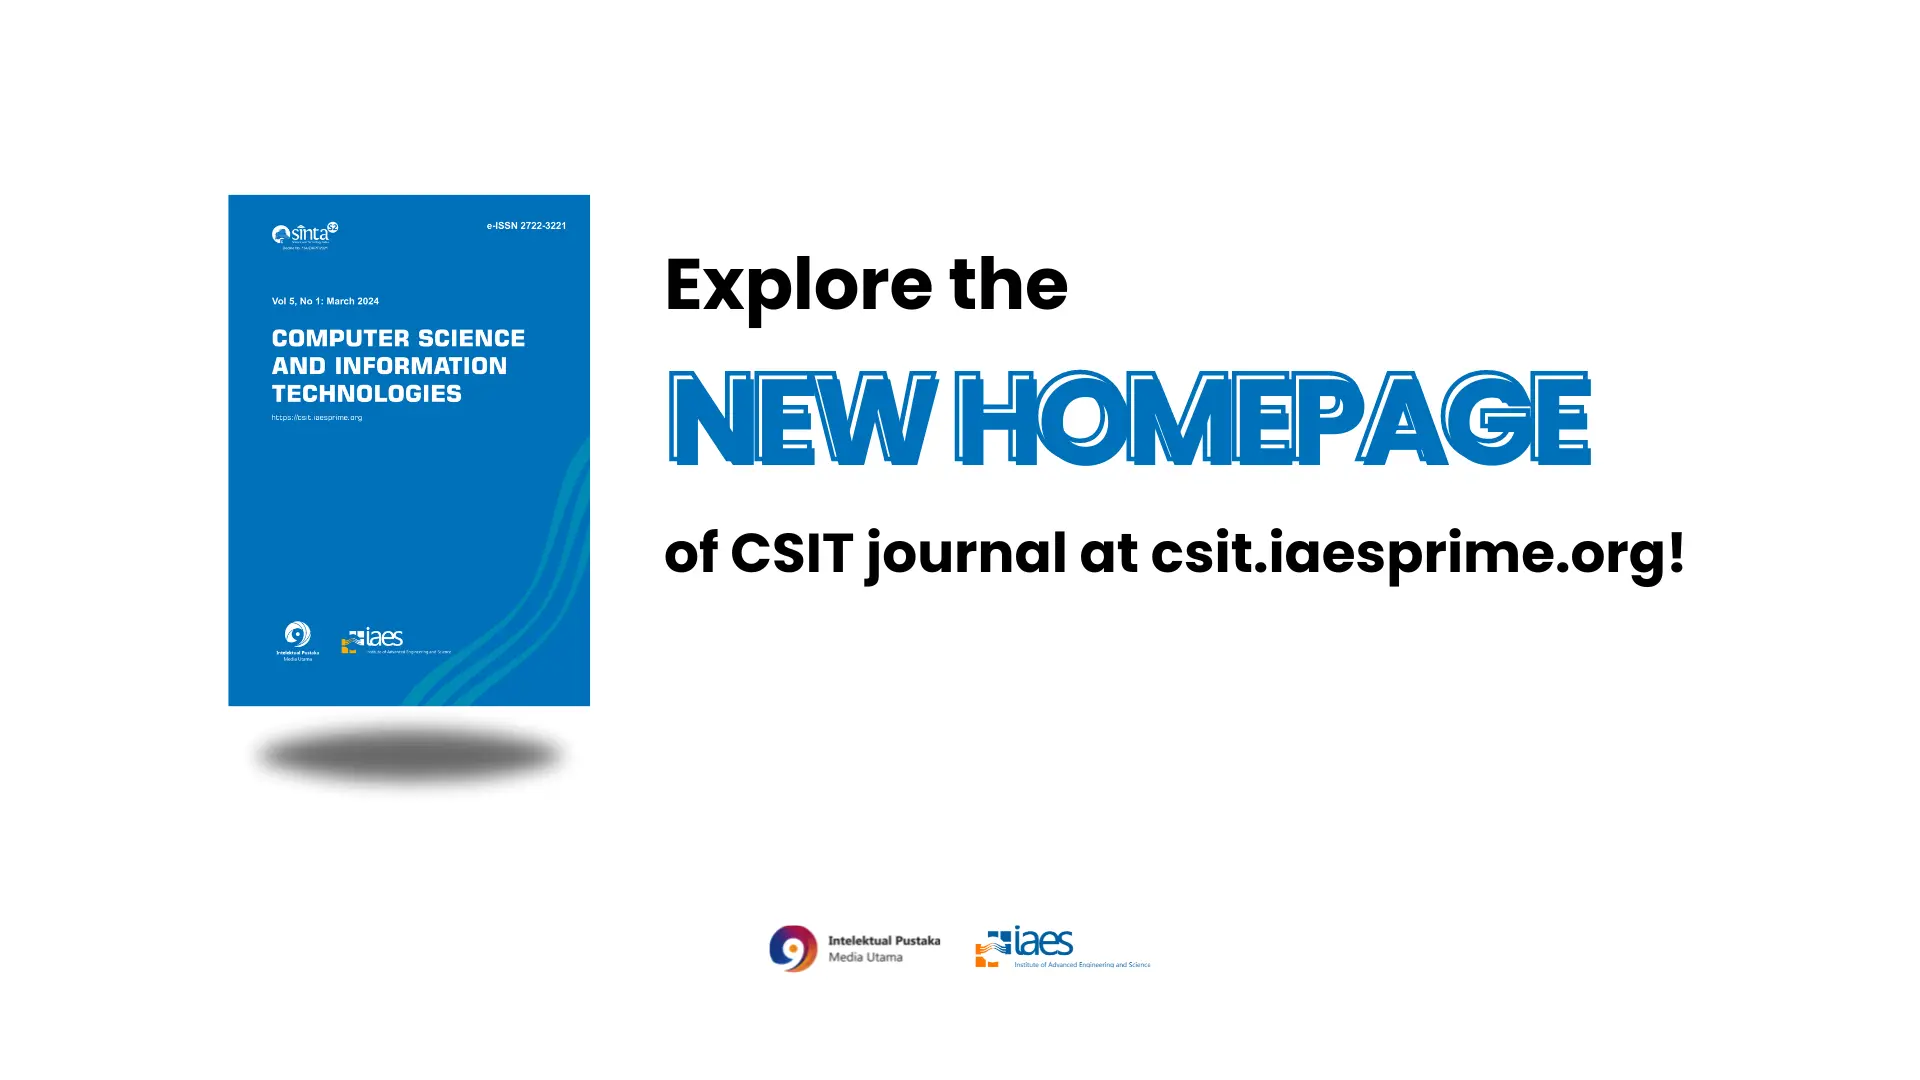 Explore CSIT journal’s new online homepage